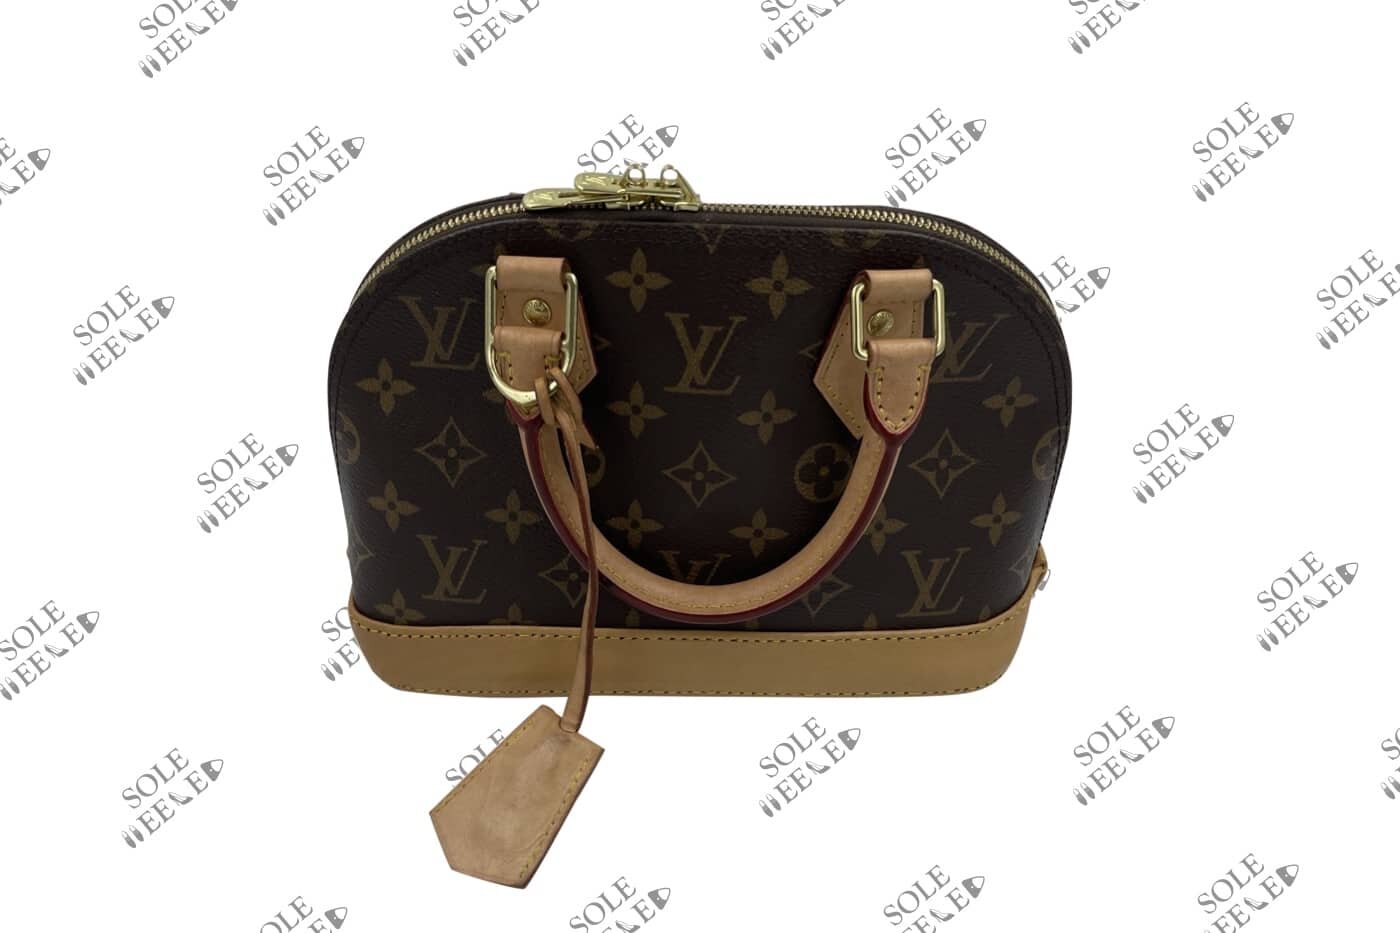 Does Louis Vuitton repair vintage bags? - Questions & Answers